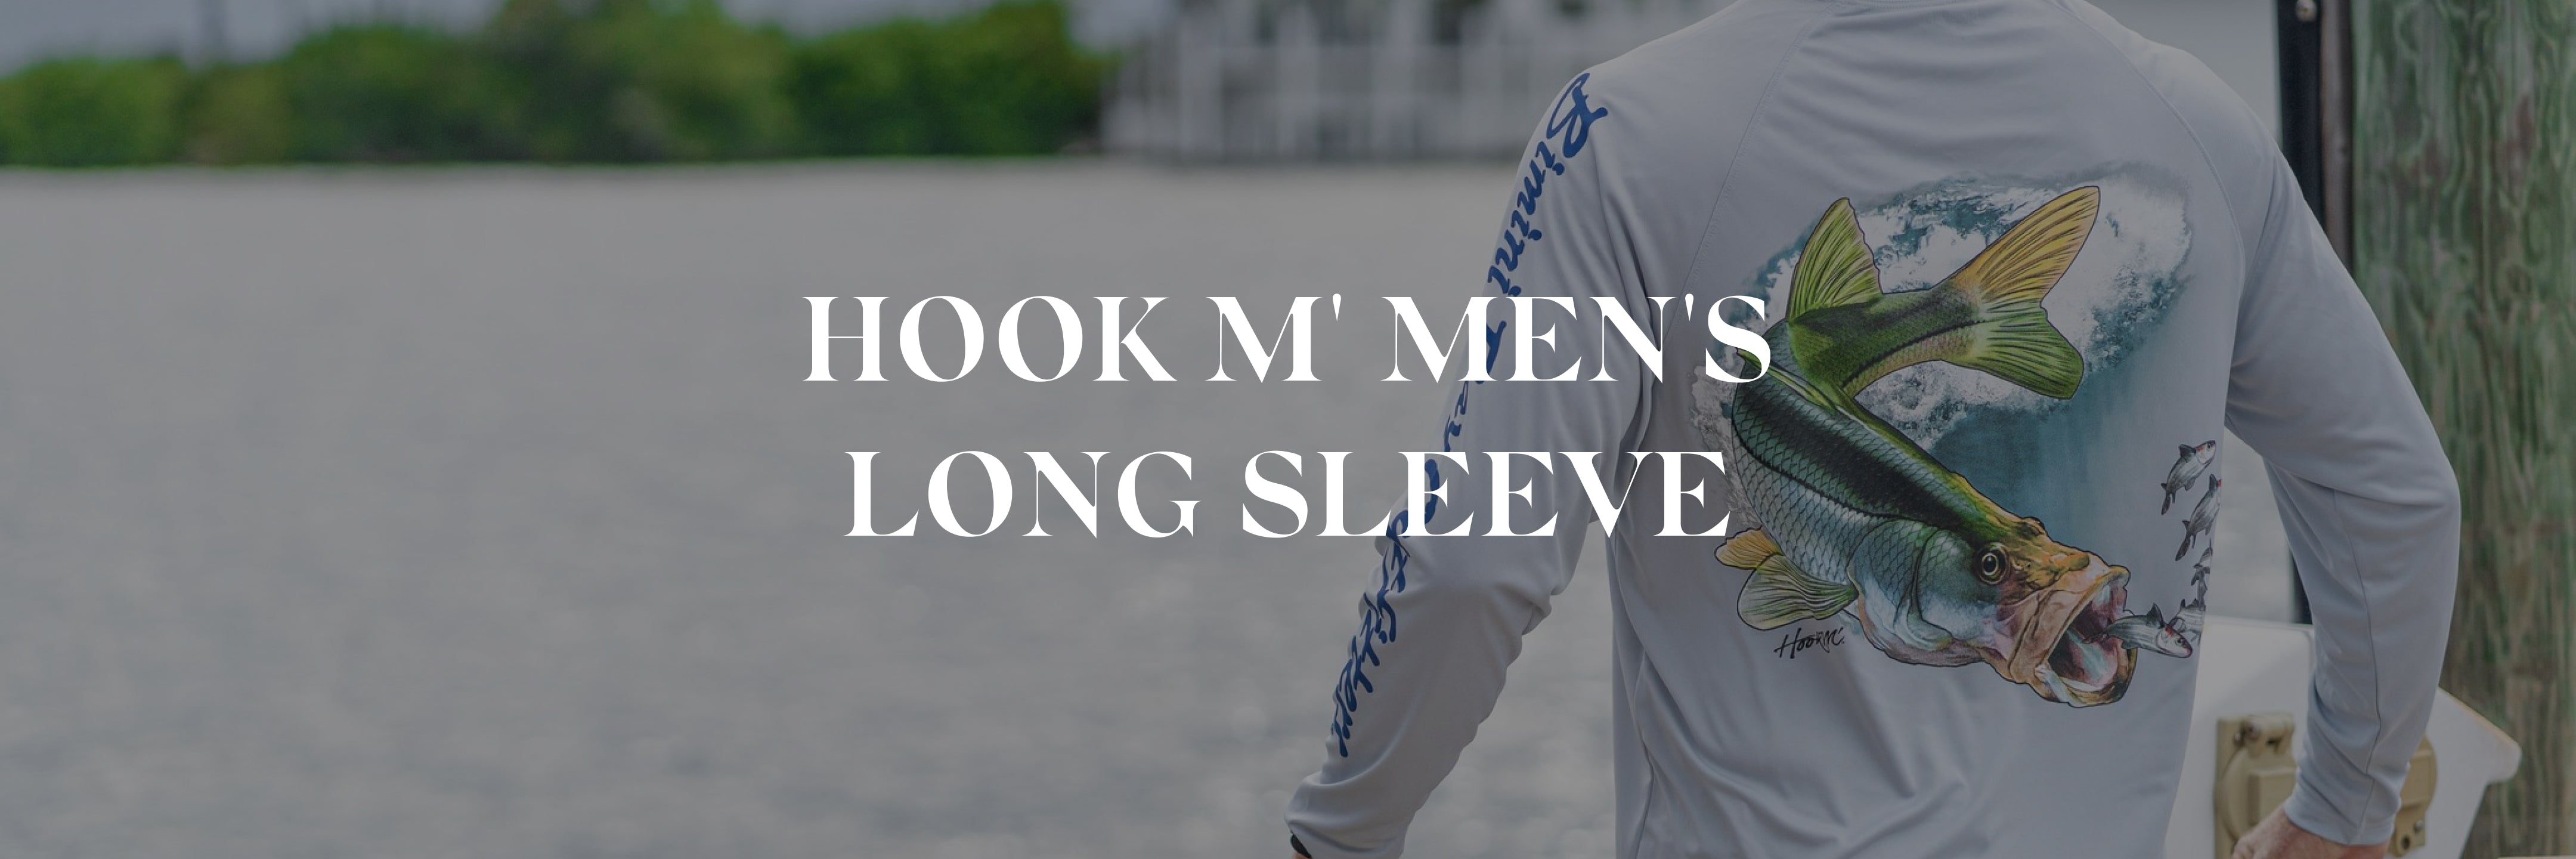 Hook M' Men's Long Sleeve Shirts